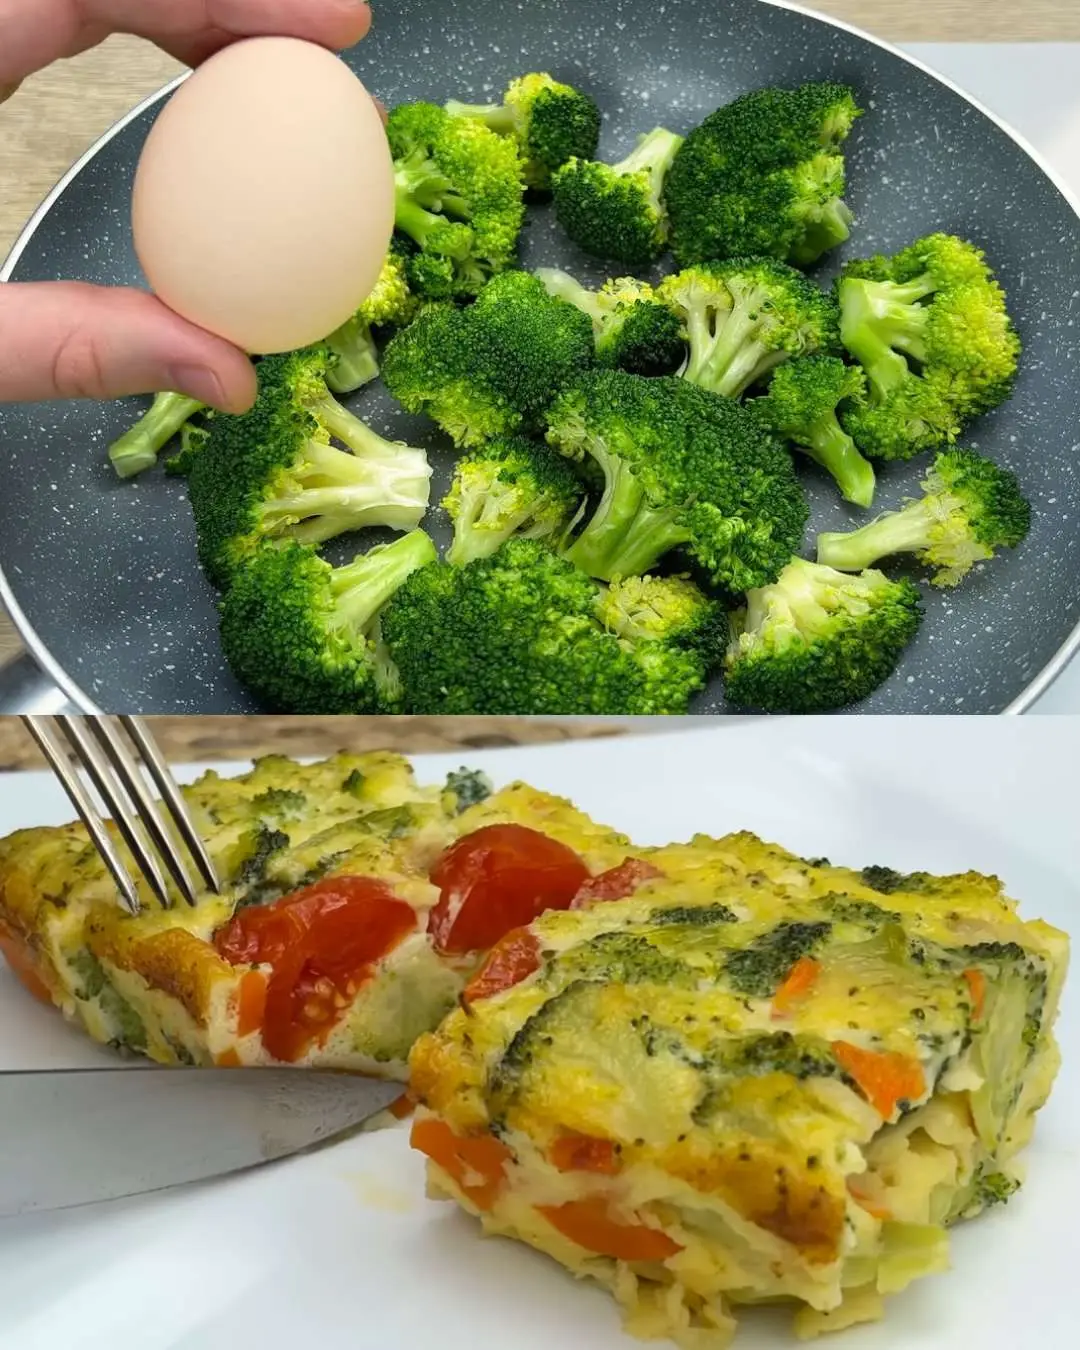 Preparation and final presentation of the Healthy Broccoli Egg Bake.